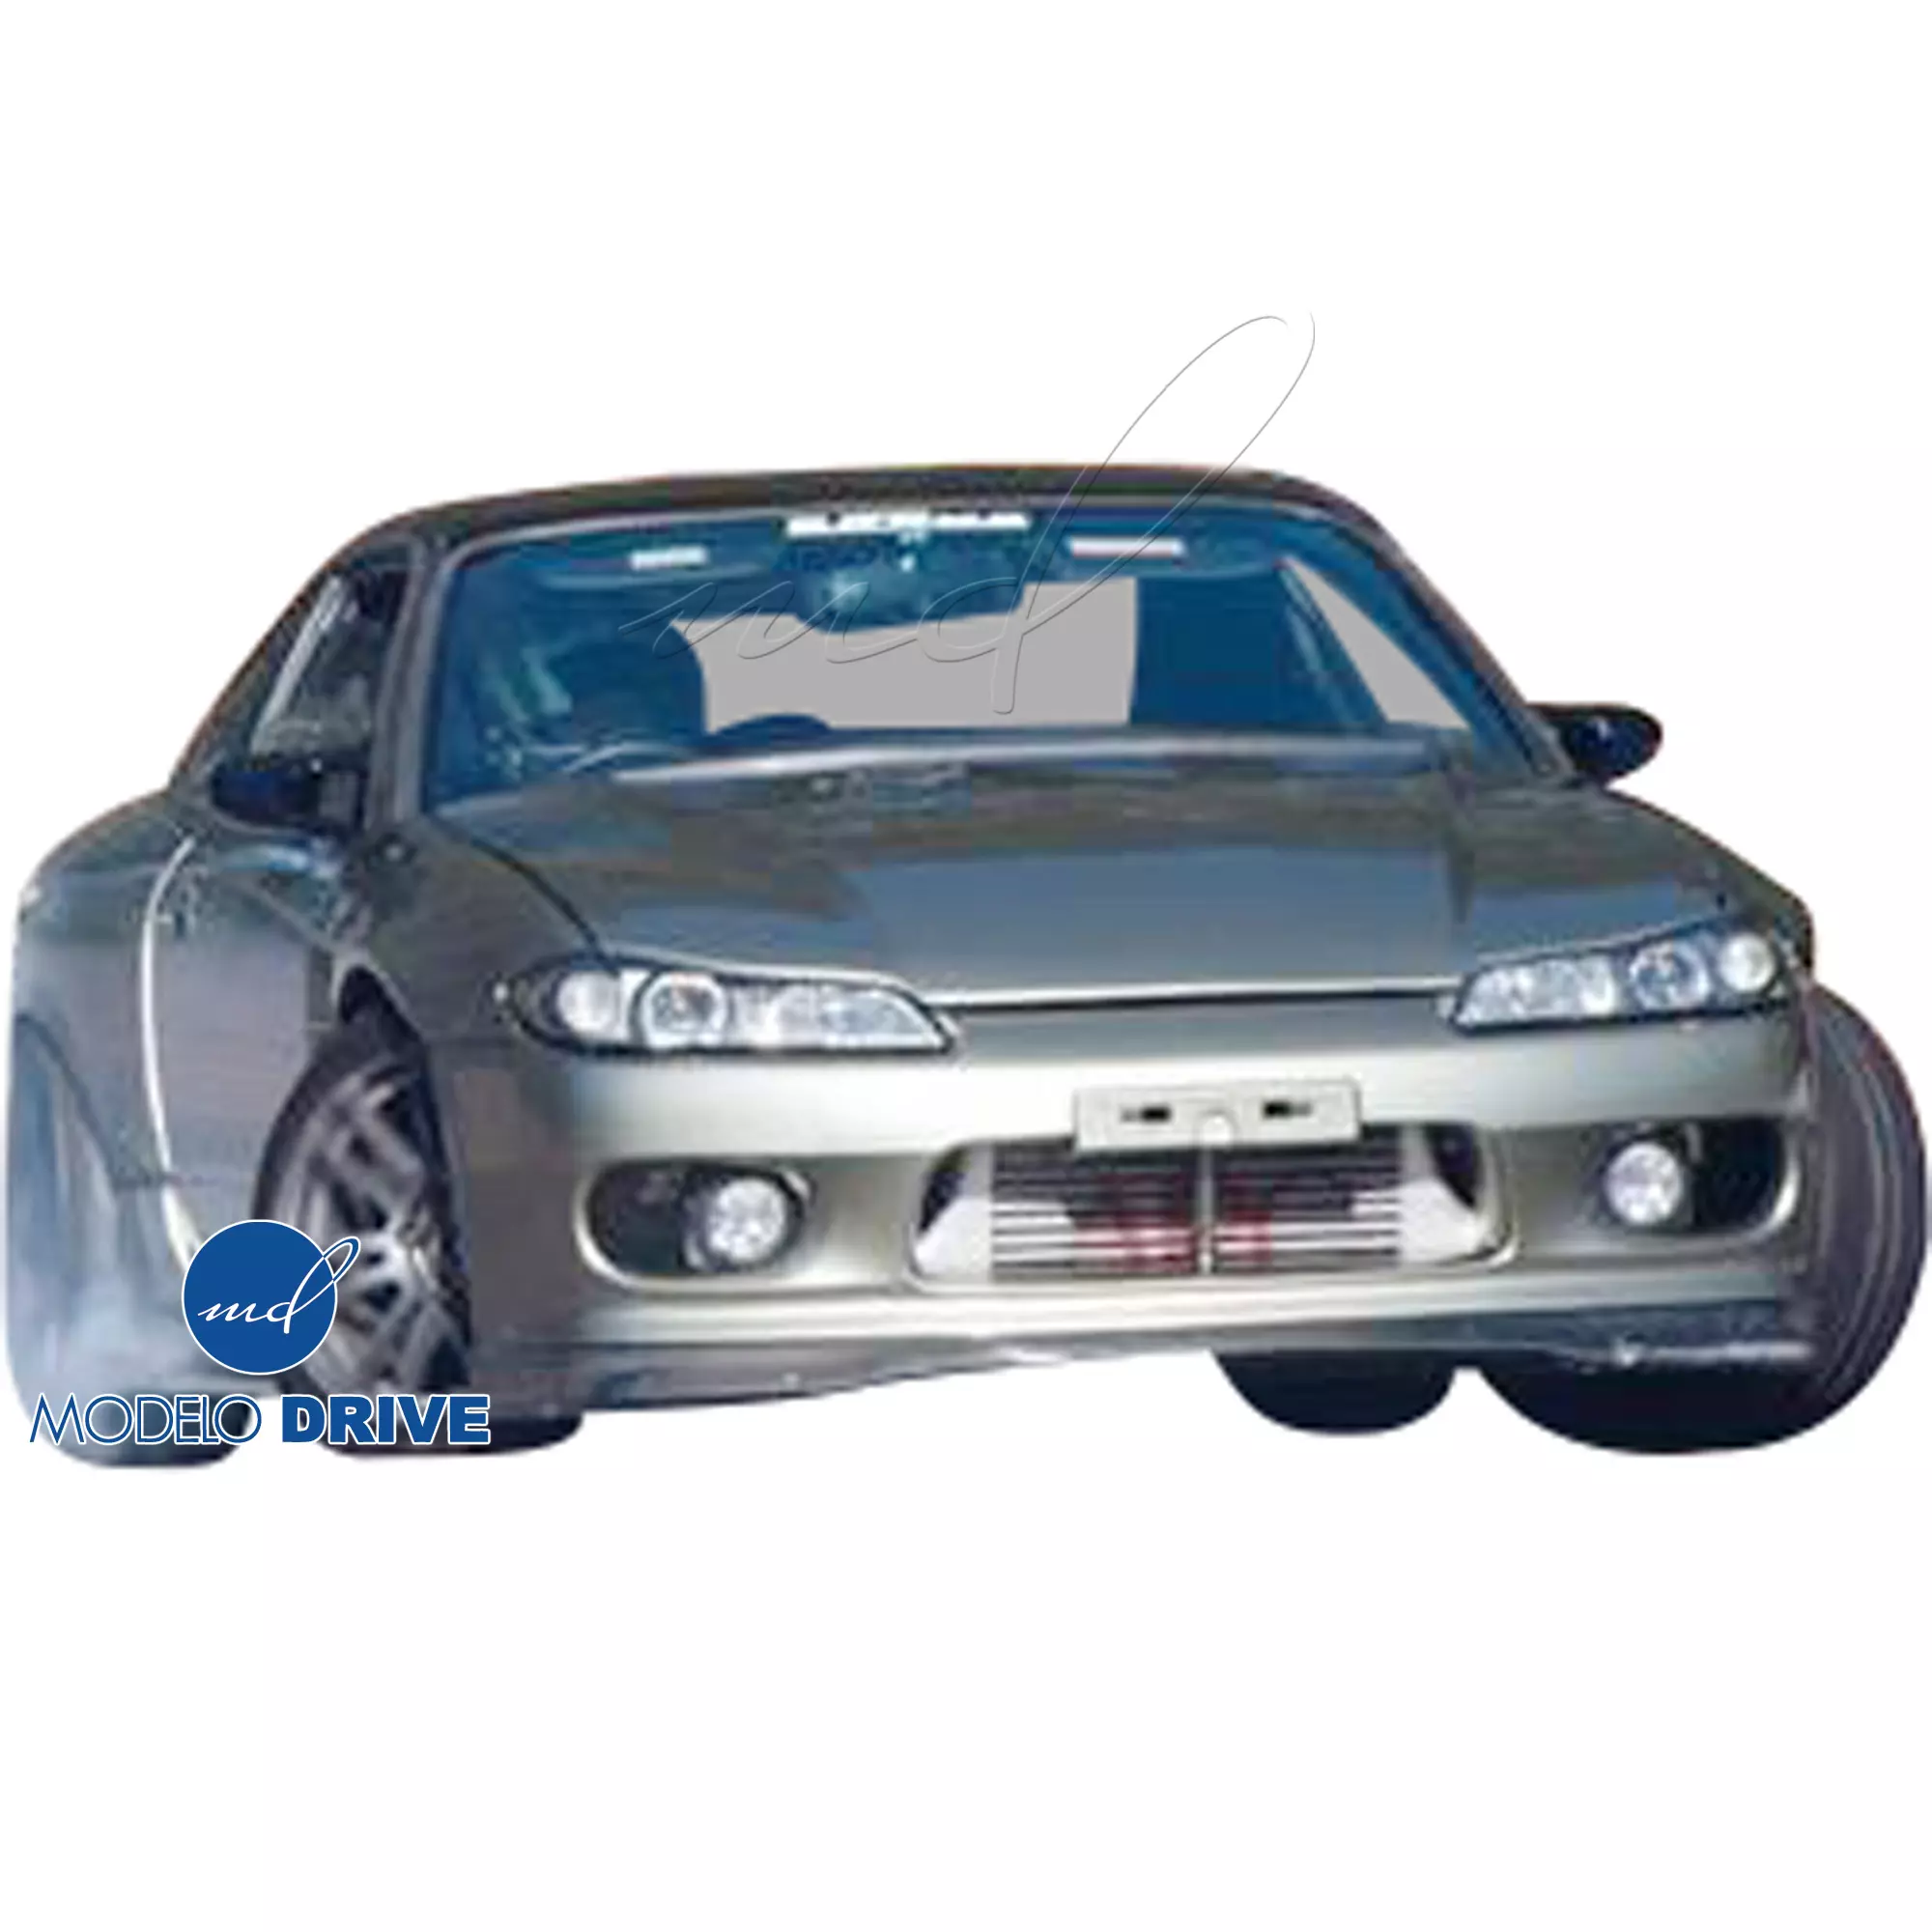 ModeloDrive Carbon Fiber AFLU Front Lip Diffuser > Nissan Silvia S15 1999-2002 - Image 3